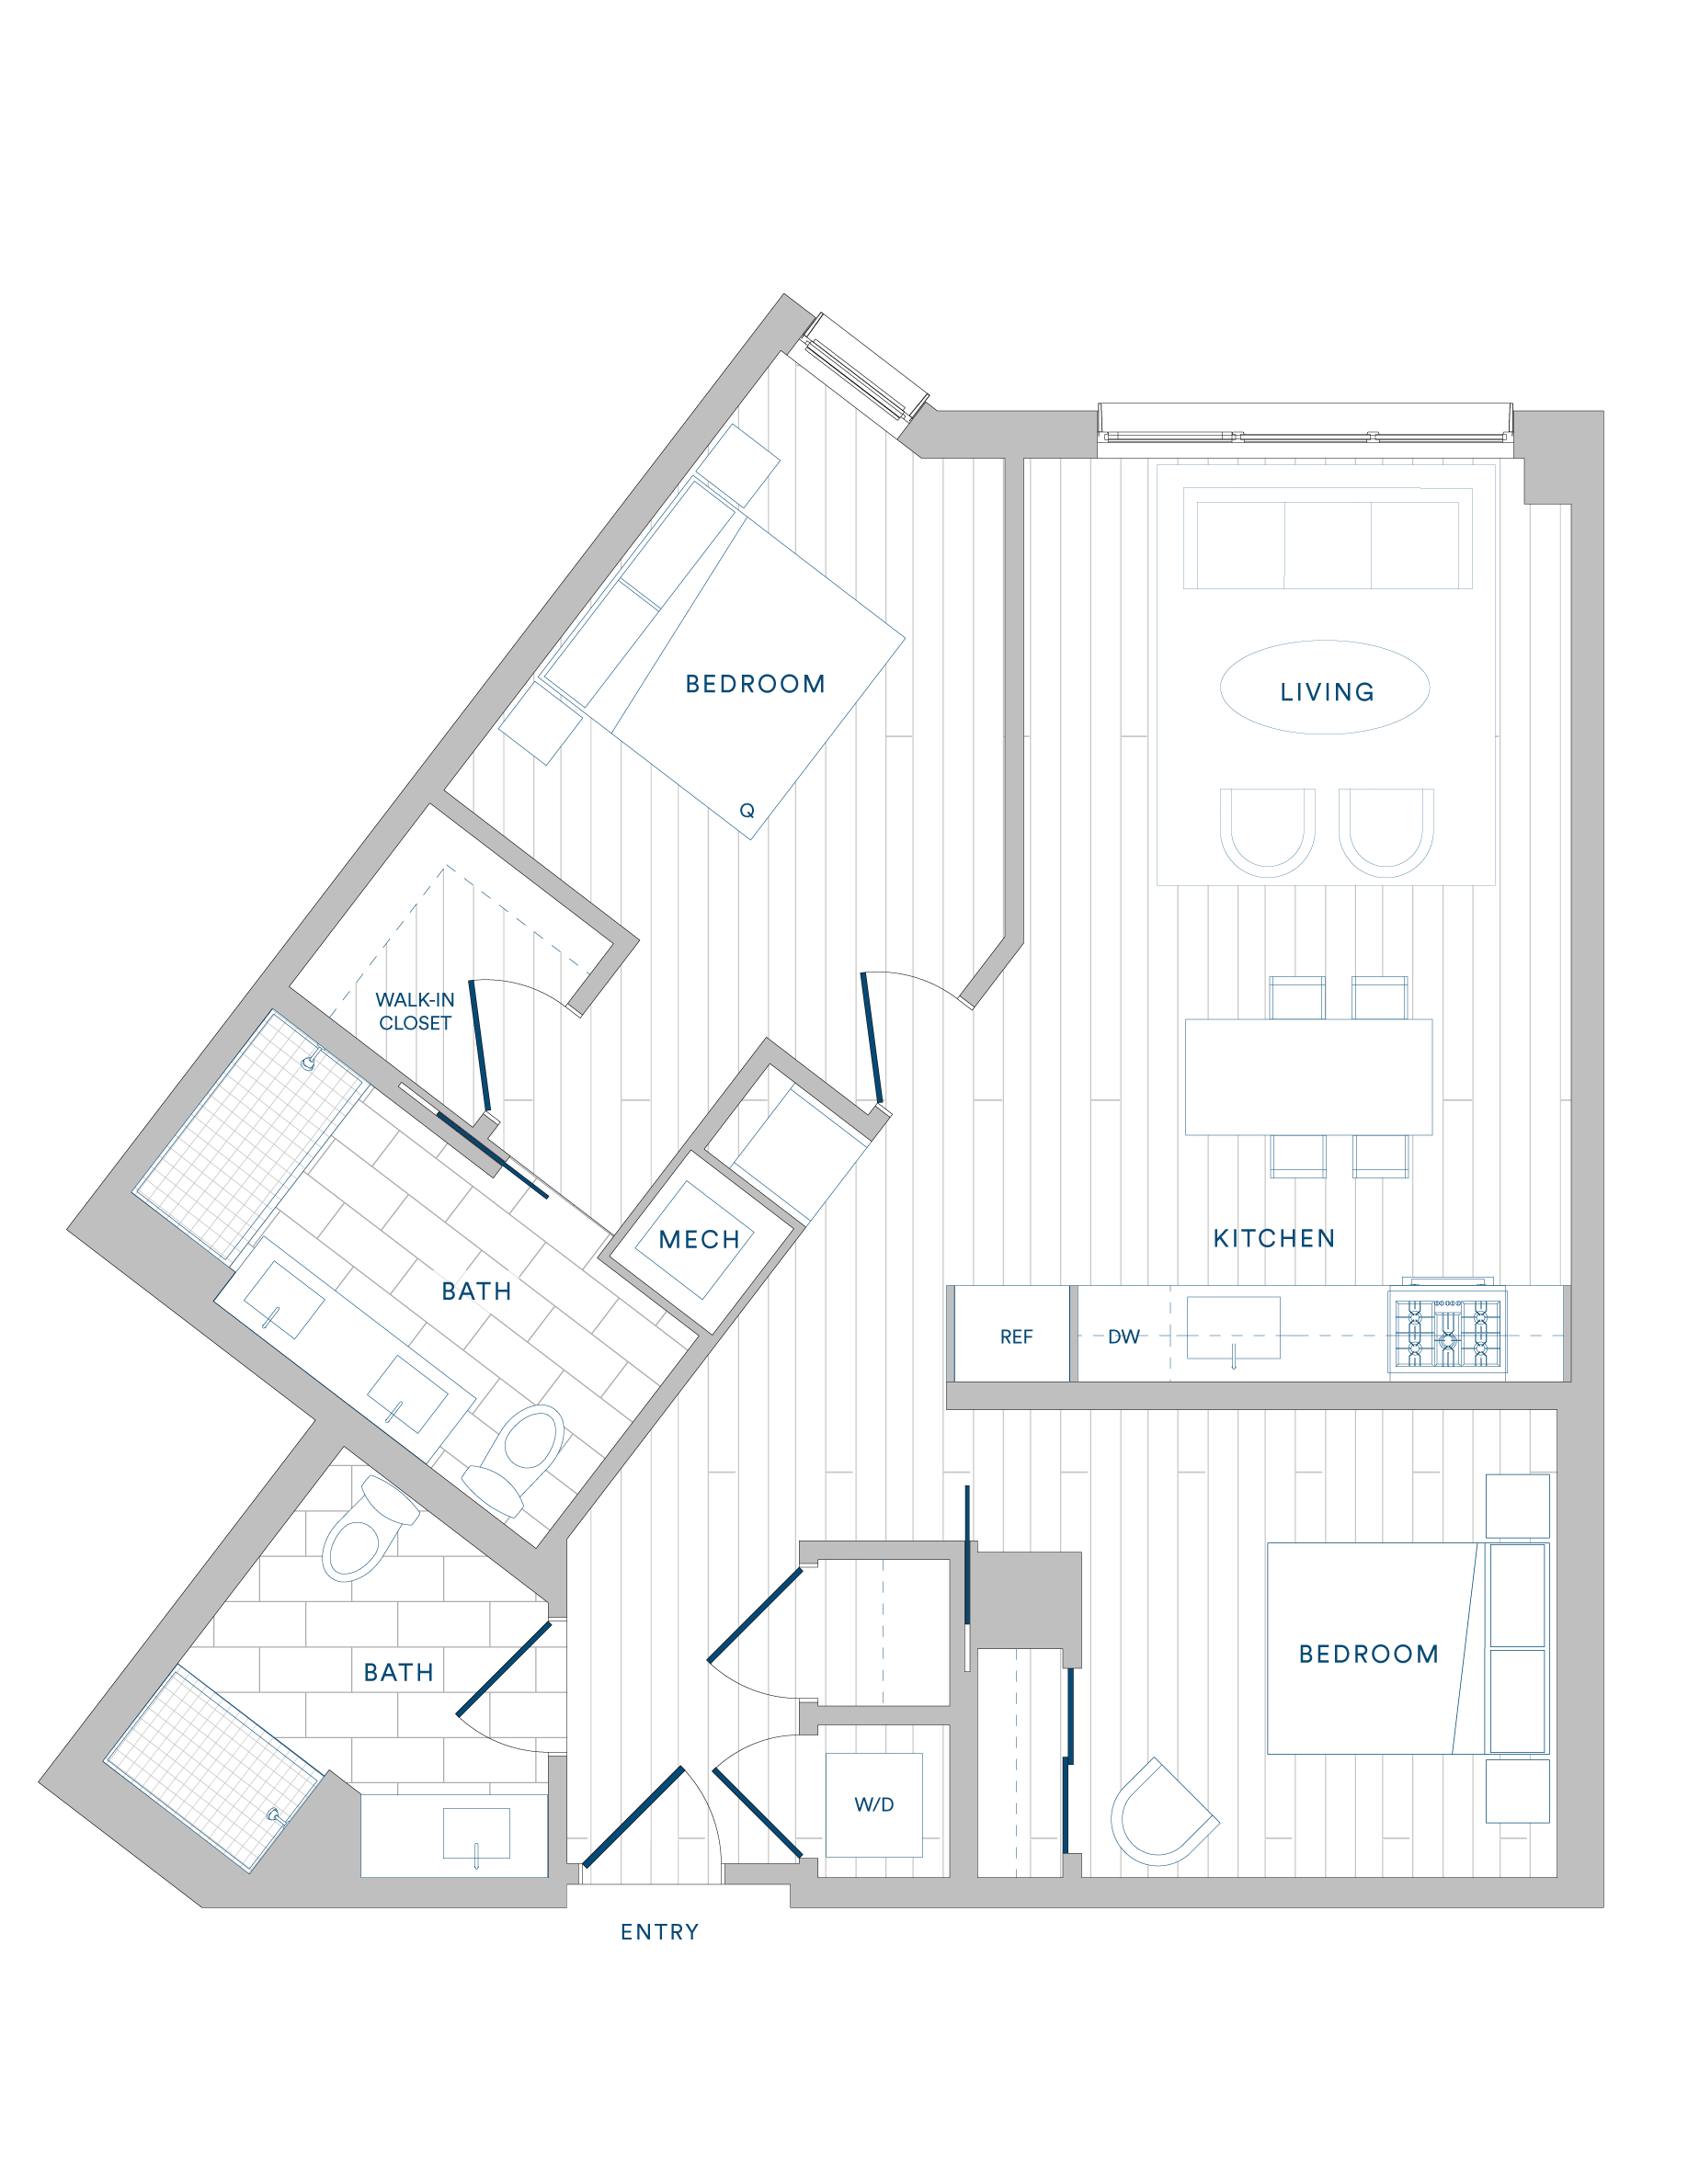 Floorplan for Apartment #302, 2 bedroom unit at Margarite